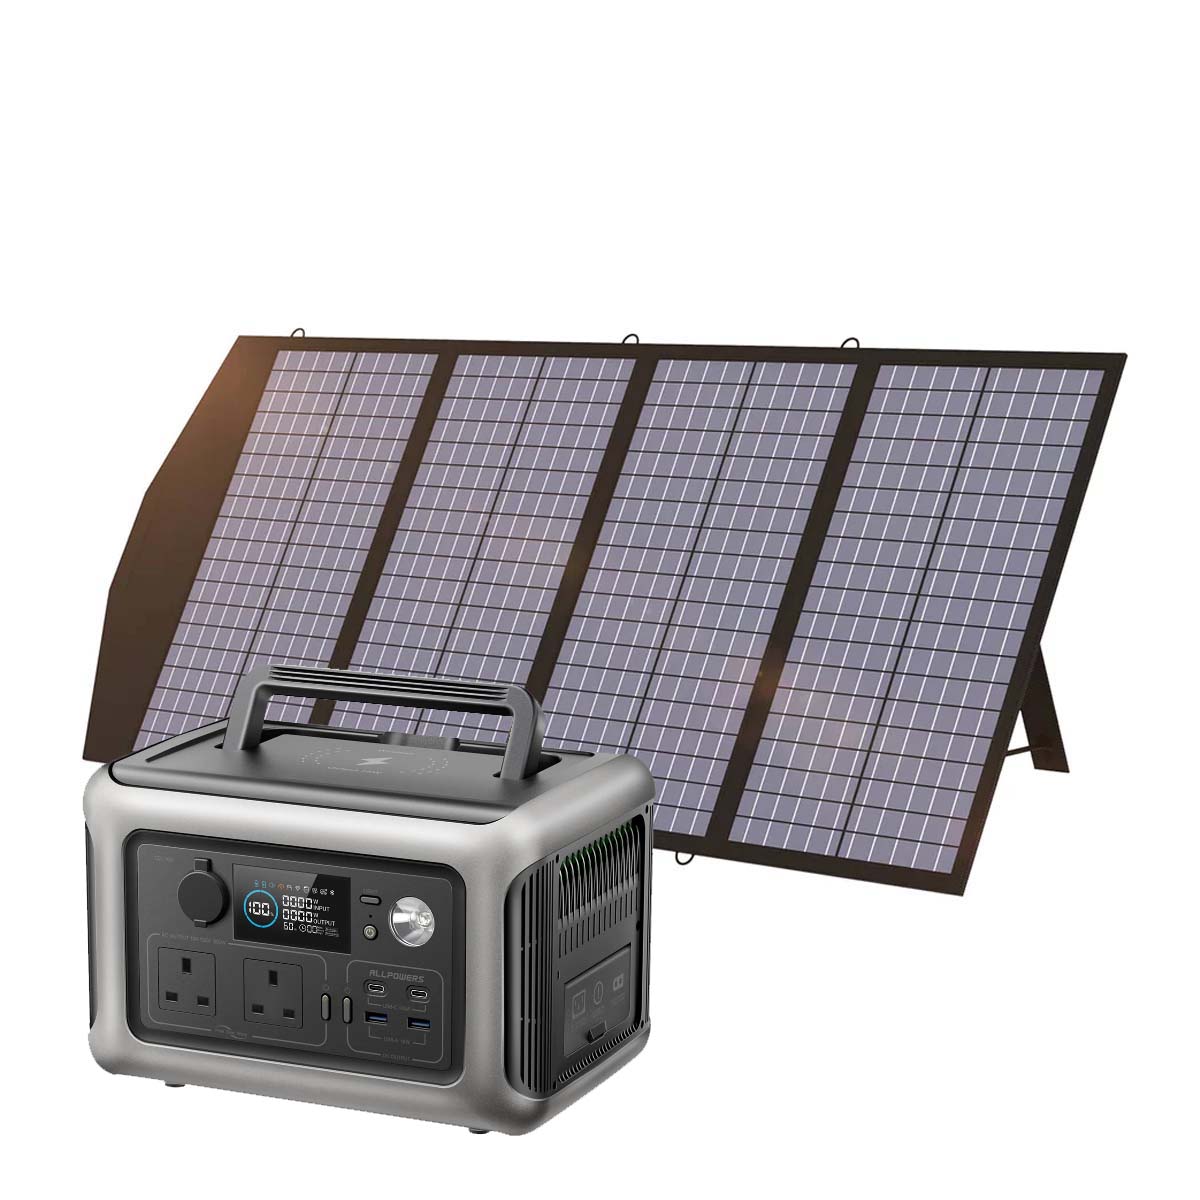 r600-black-1-sp029-solar-generator-kit-uk.jpg